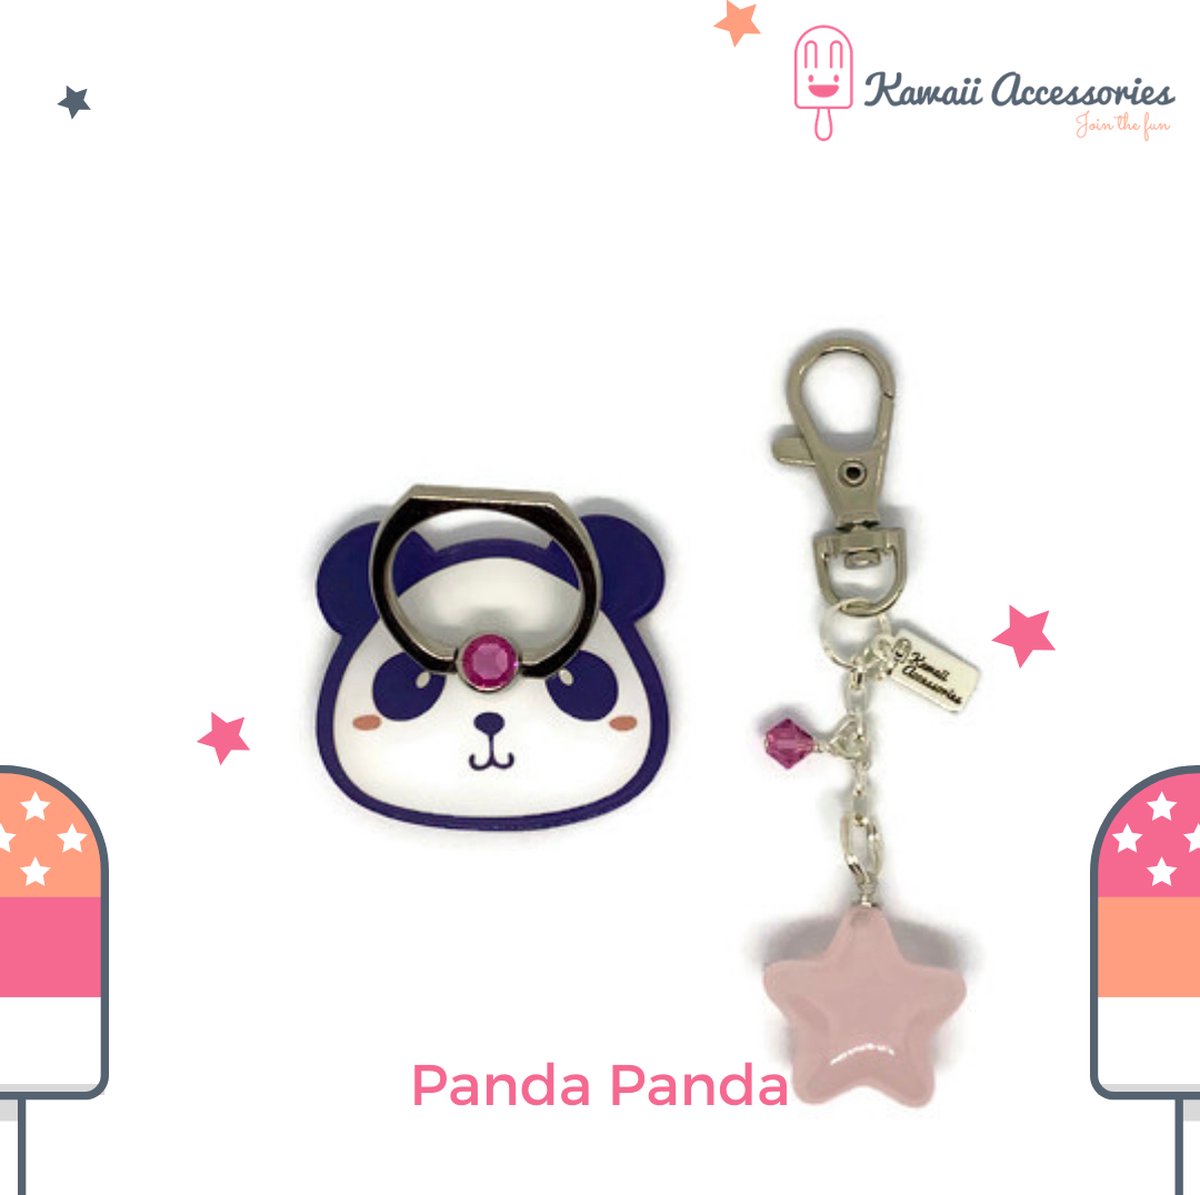 Kawaii Accessories by Kuroji - Panda Panda - Telefoonring met hanger - Swarovski elements - Kawaii style